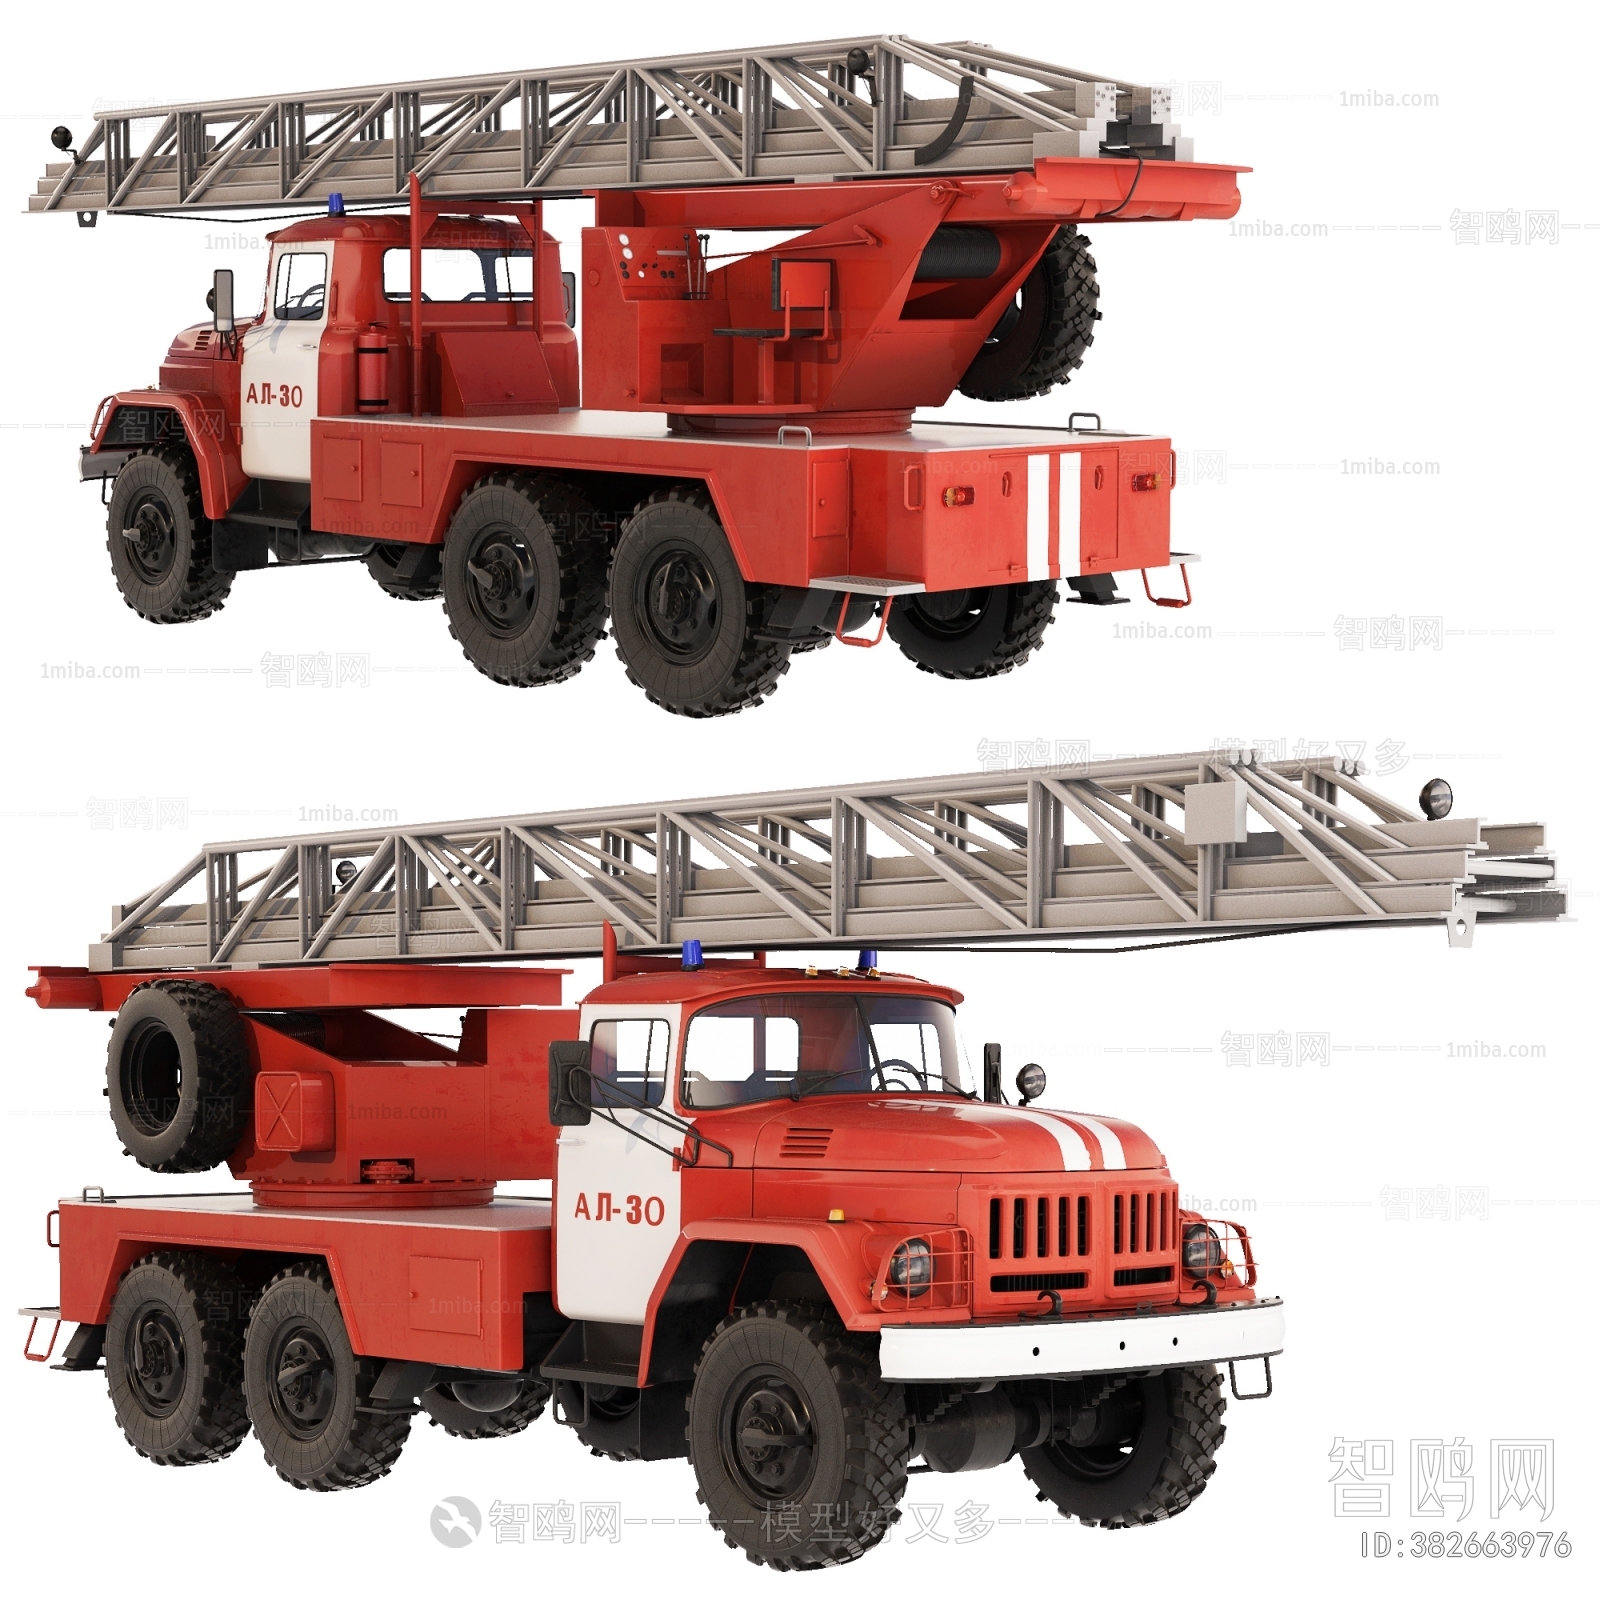 Modern Fire-fighting Equipment